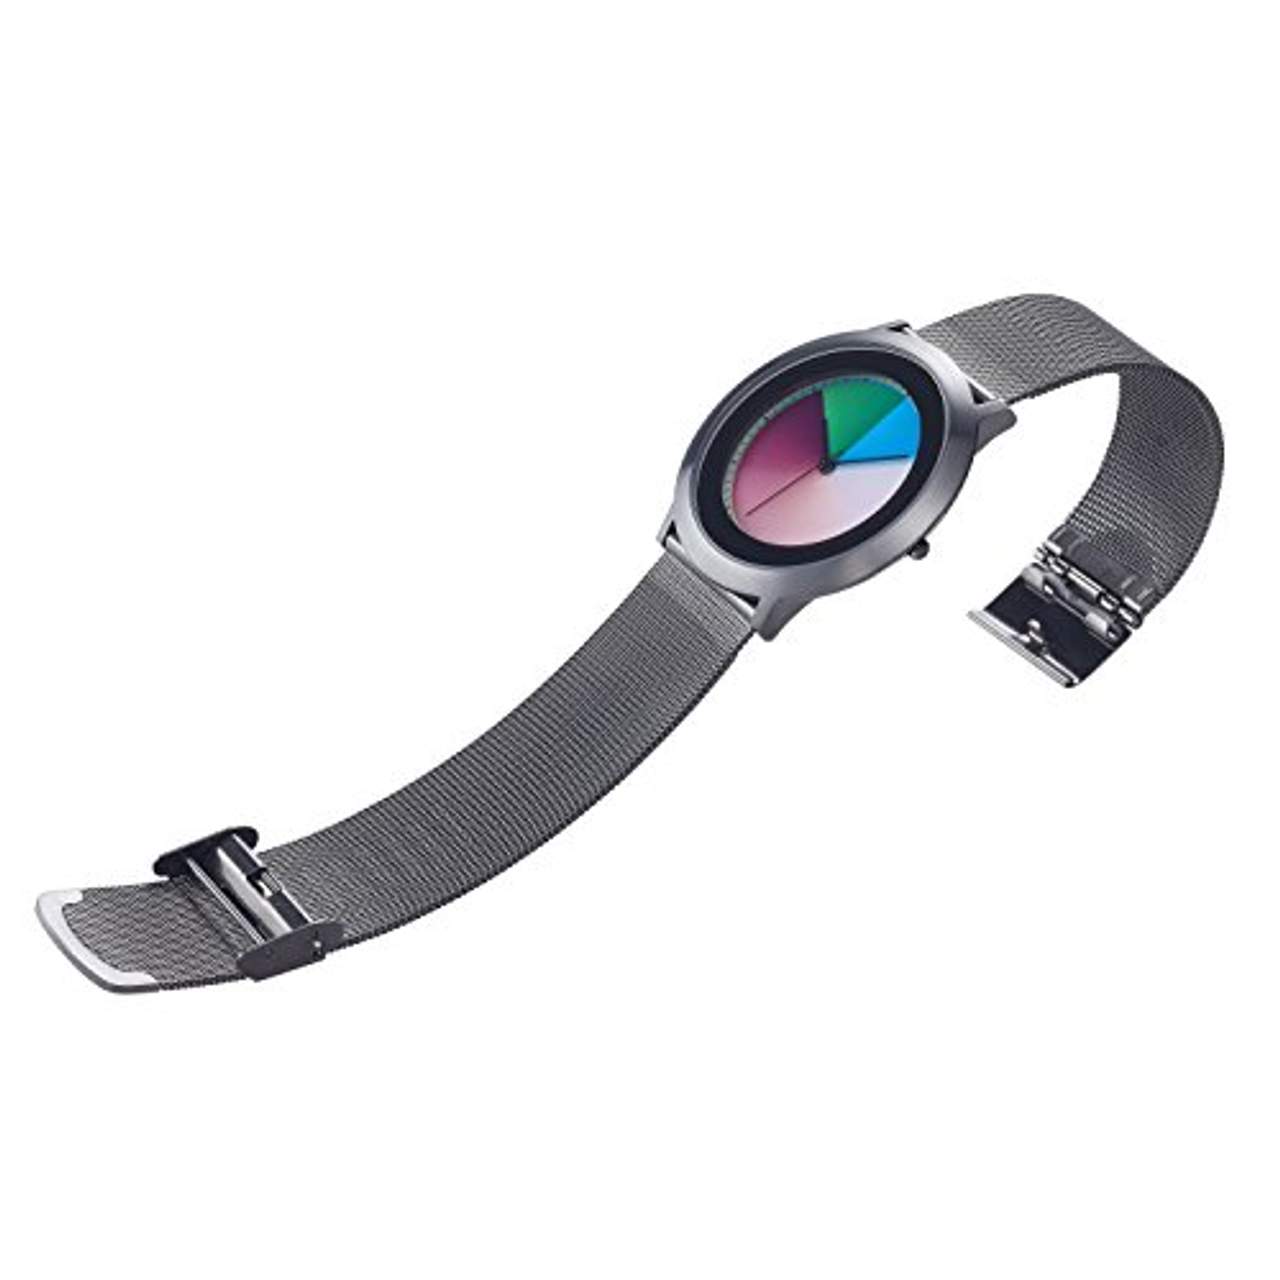 Colour Inspiration Unisex-Armbanduhr Analog Edelstahl beschichtet 2014M005